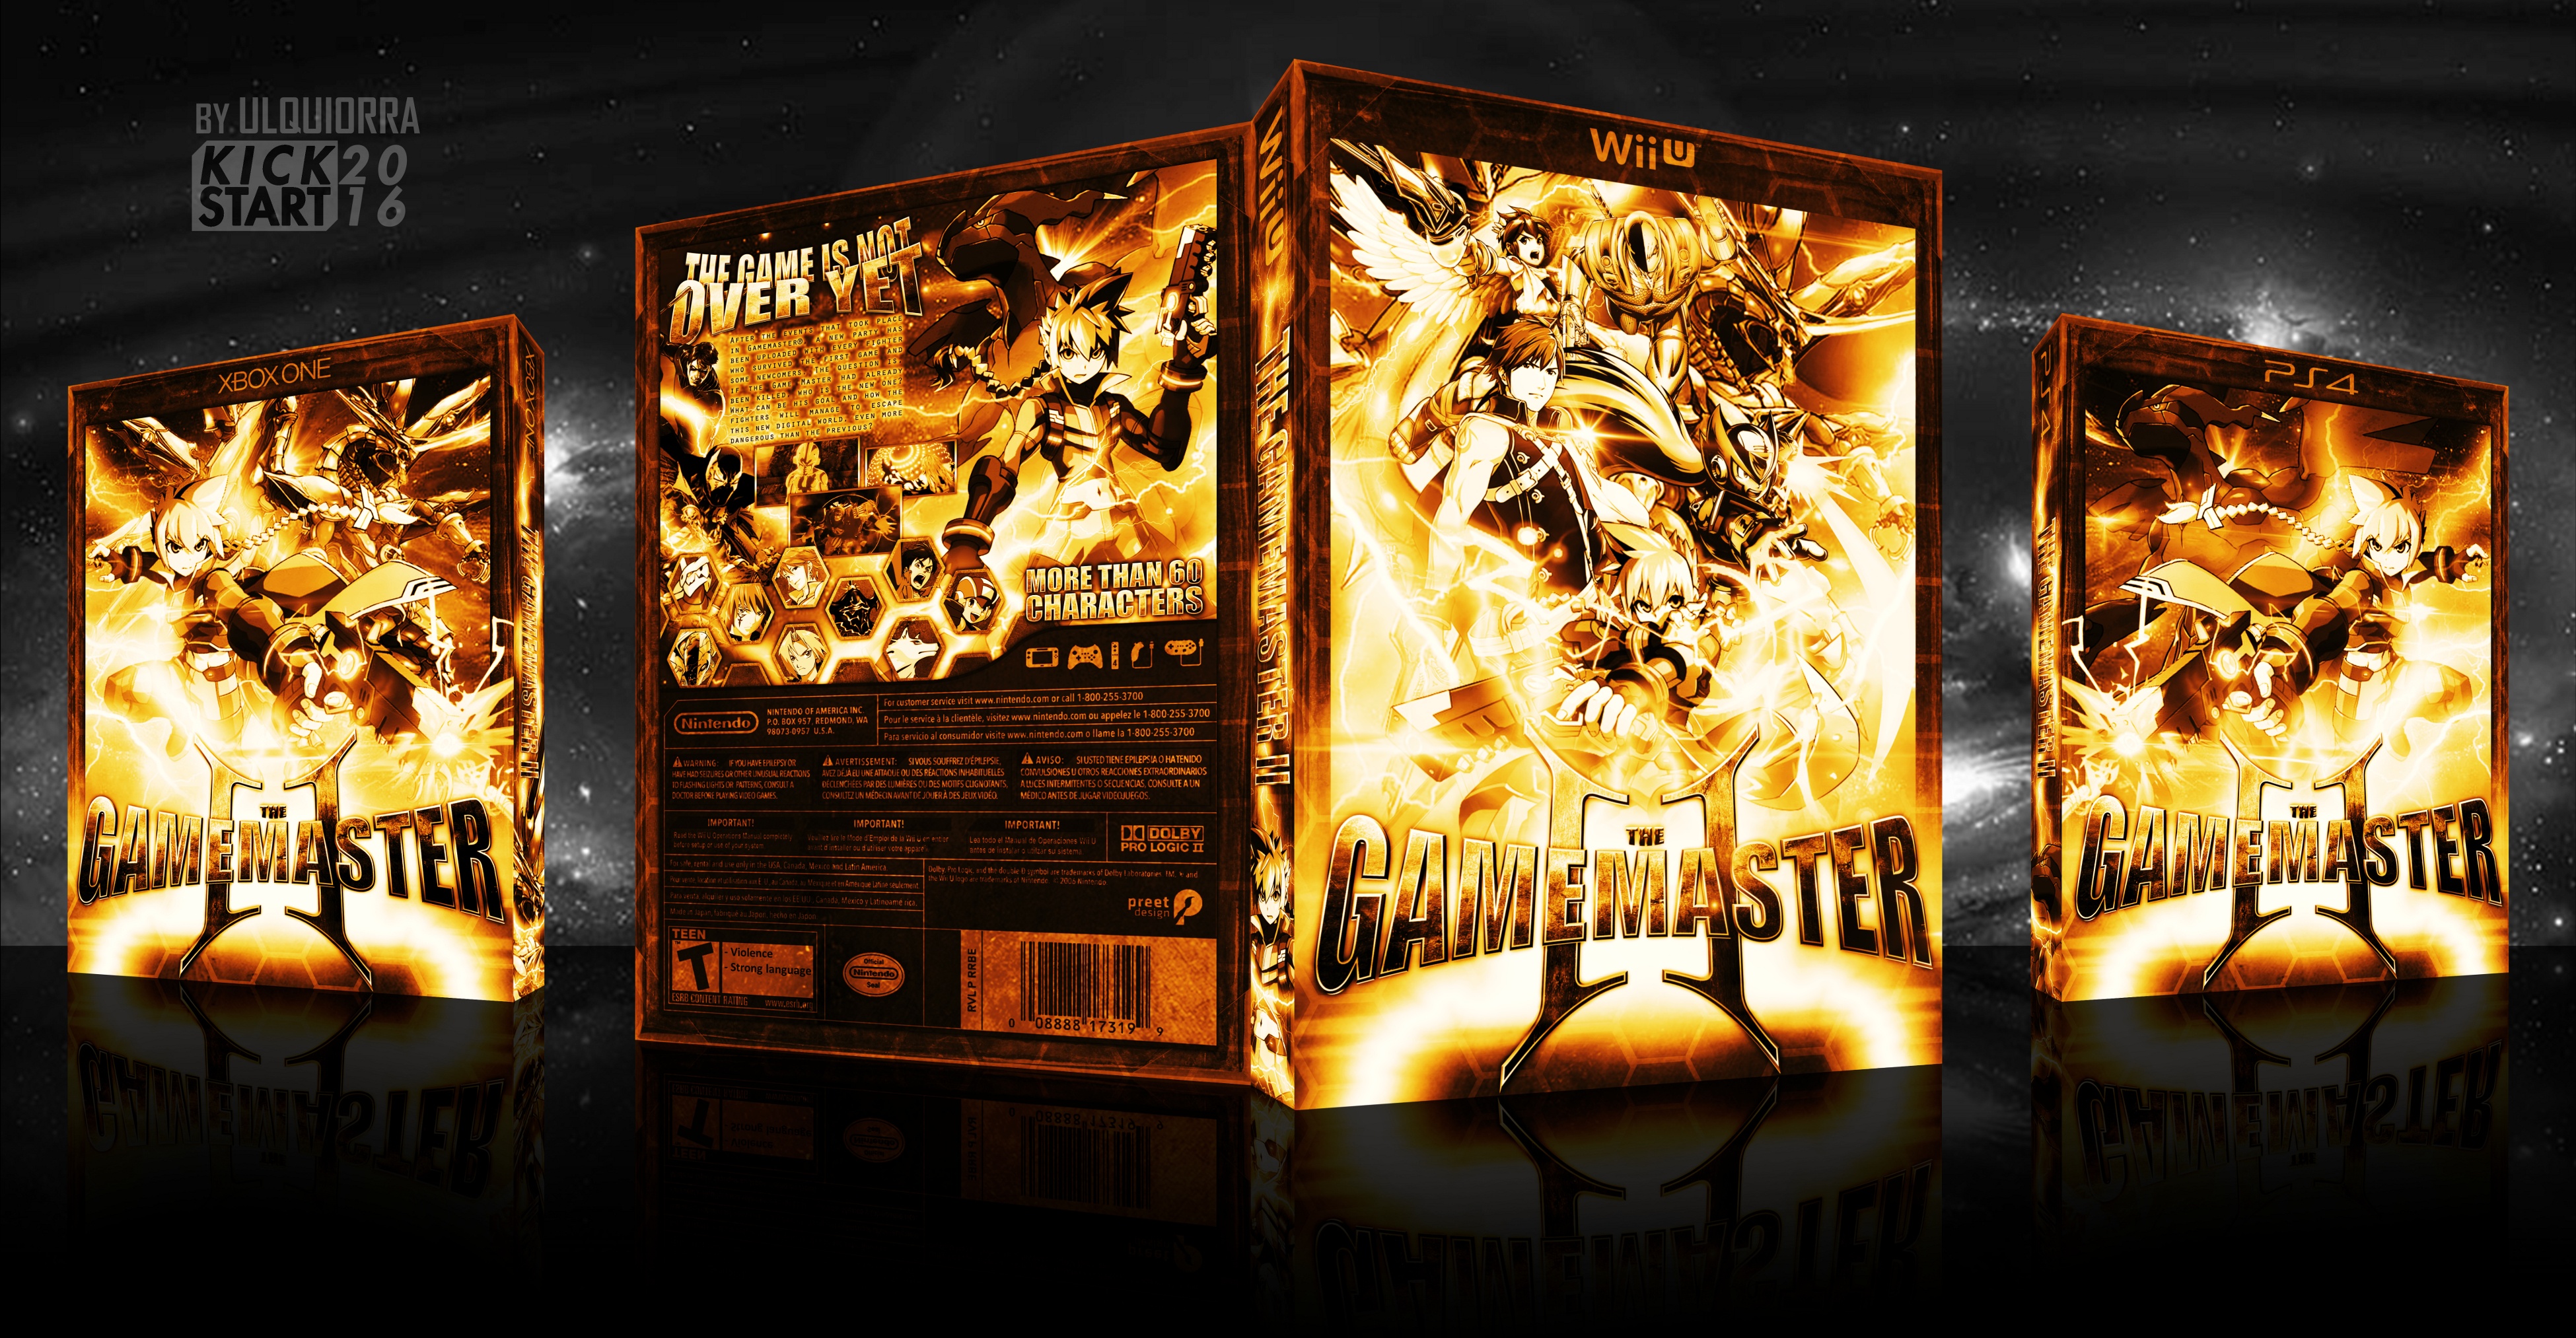 The Gamemaster II box cover